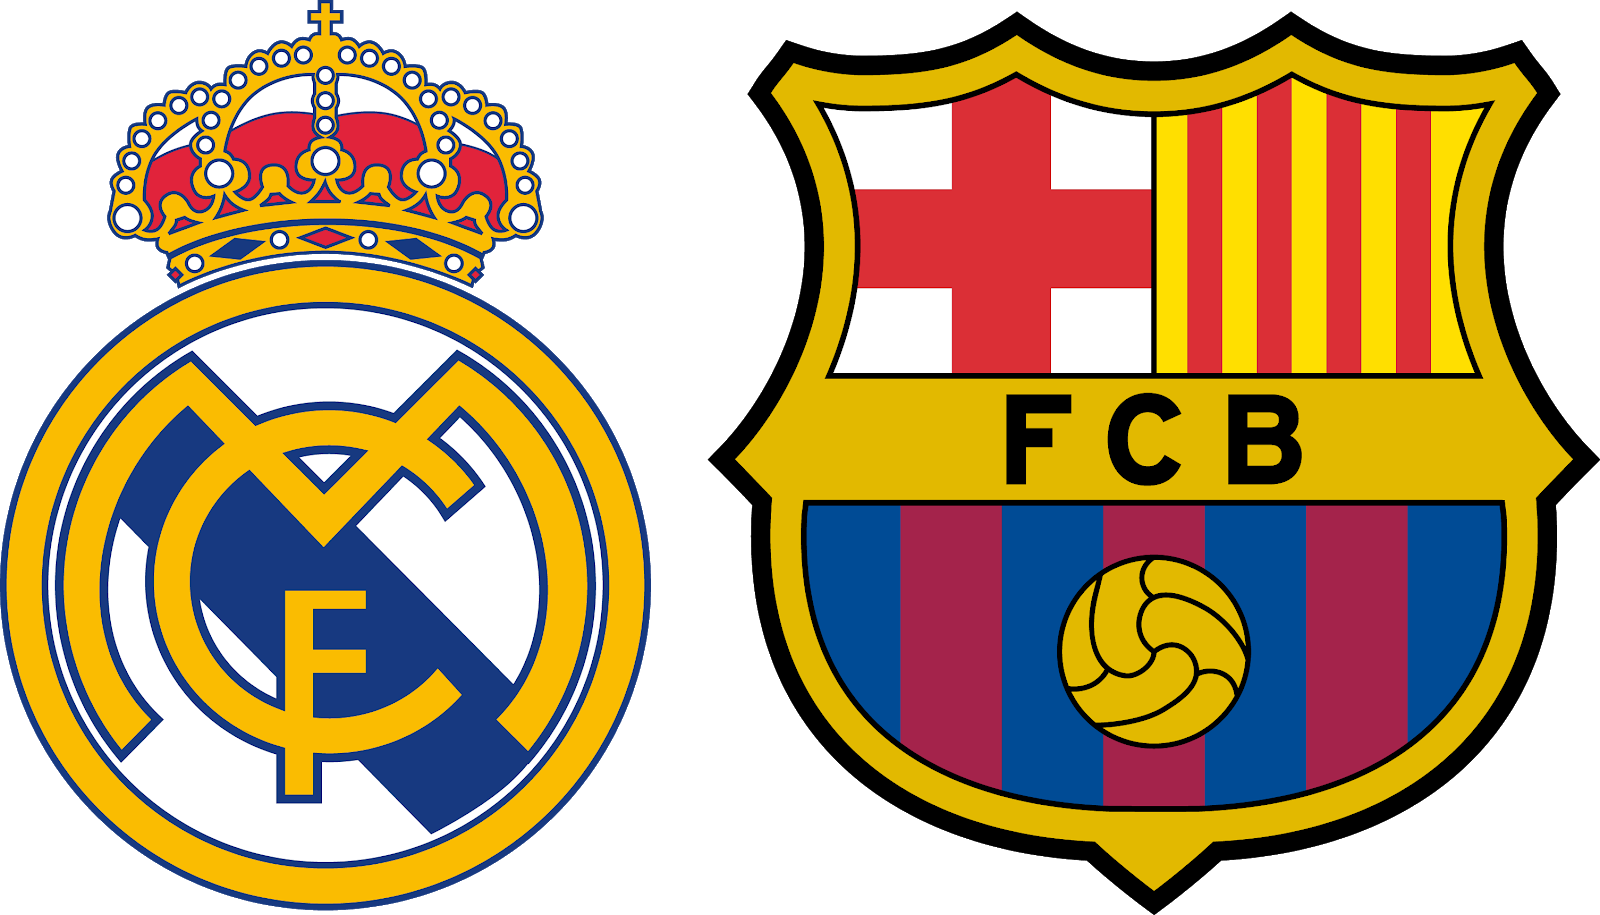 Real Madridand F C Barcelona Crests PNG image